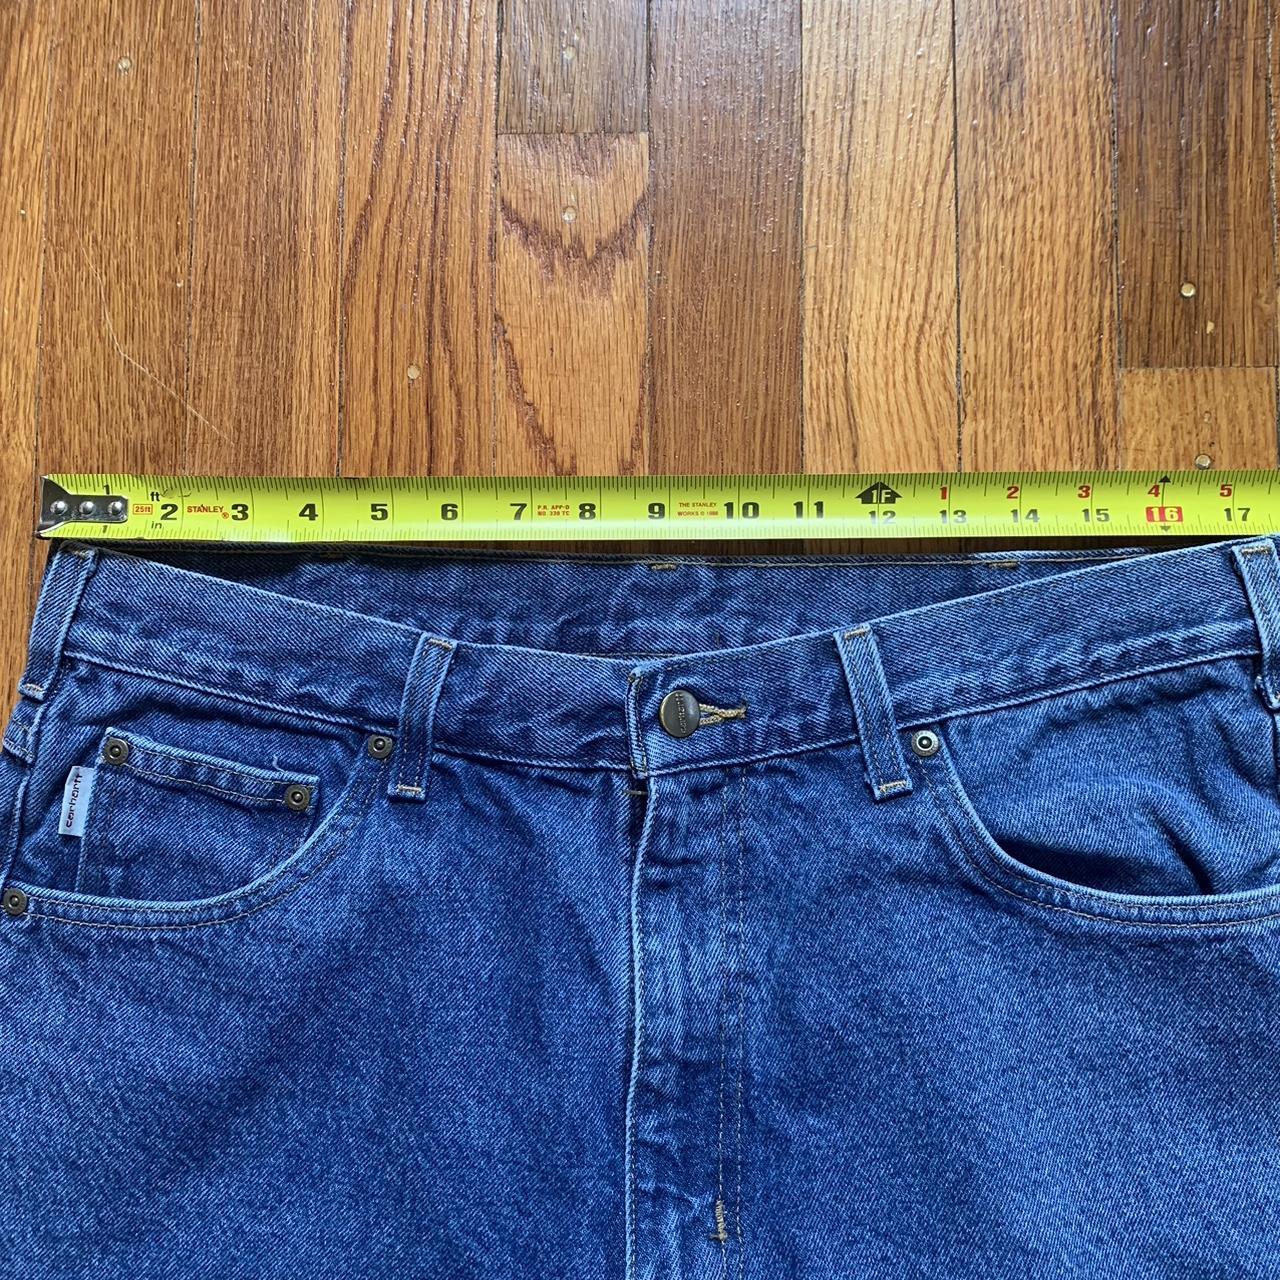 Blue baggy Carhartt skater jeans - measurements as... - Depop